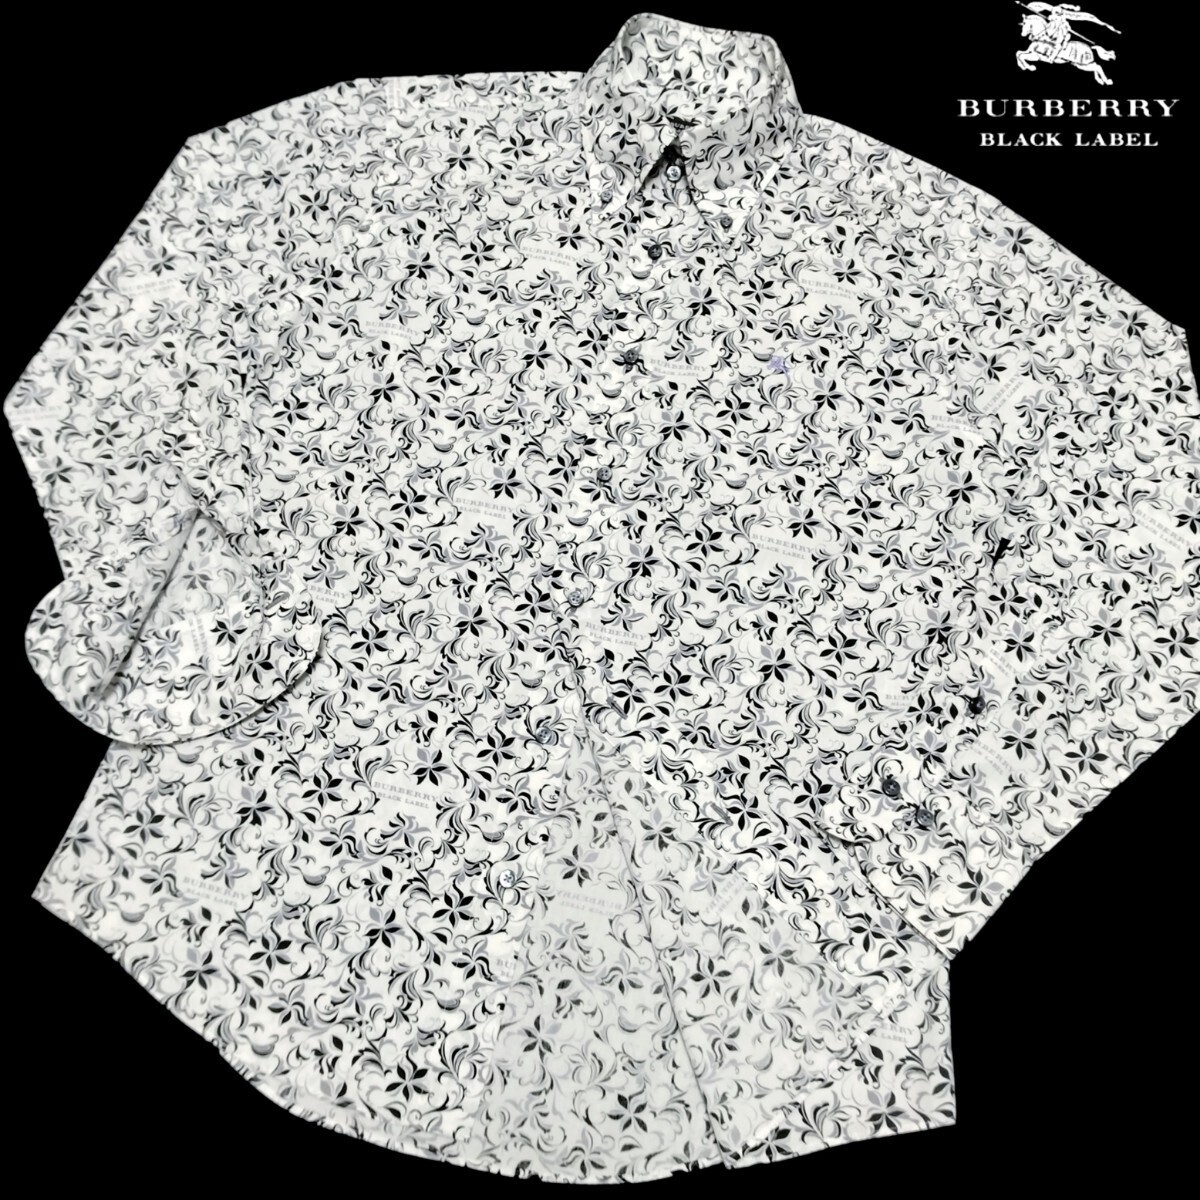  Burberry Black Label # цветок монограмма общий рисунок шланг вышивка 2(M) белый du evo to-ni длинный рукав BD рубашка BURBERRY BLACK LABEL